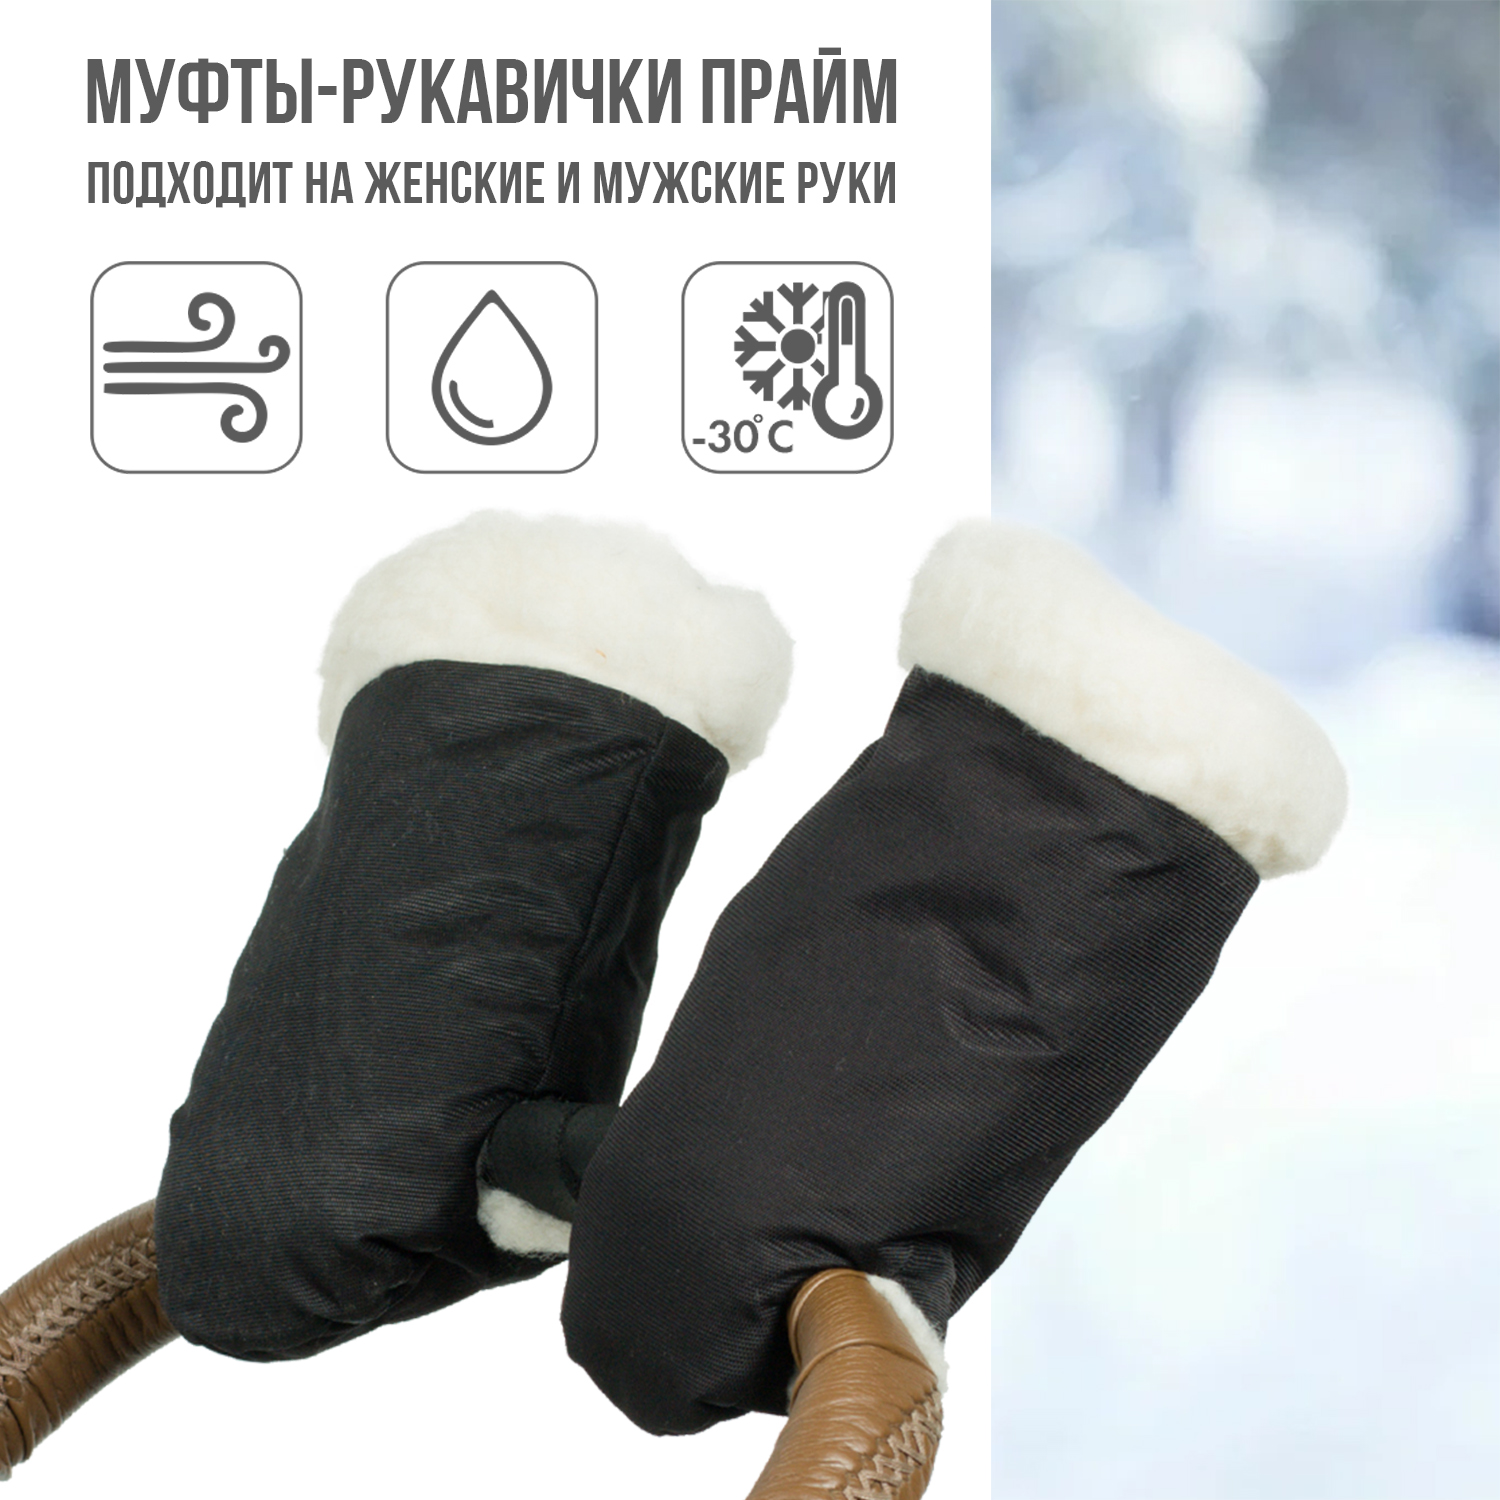 Муфта-рукавички для коляски Чудо-чадо меховая Прайм графит МРМ07-001 - фото 1